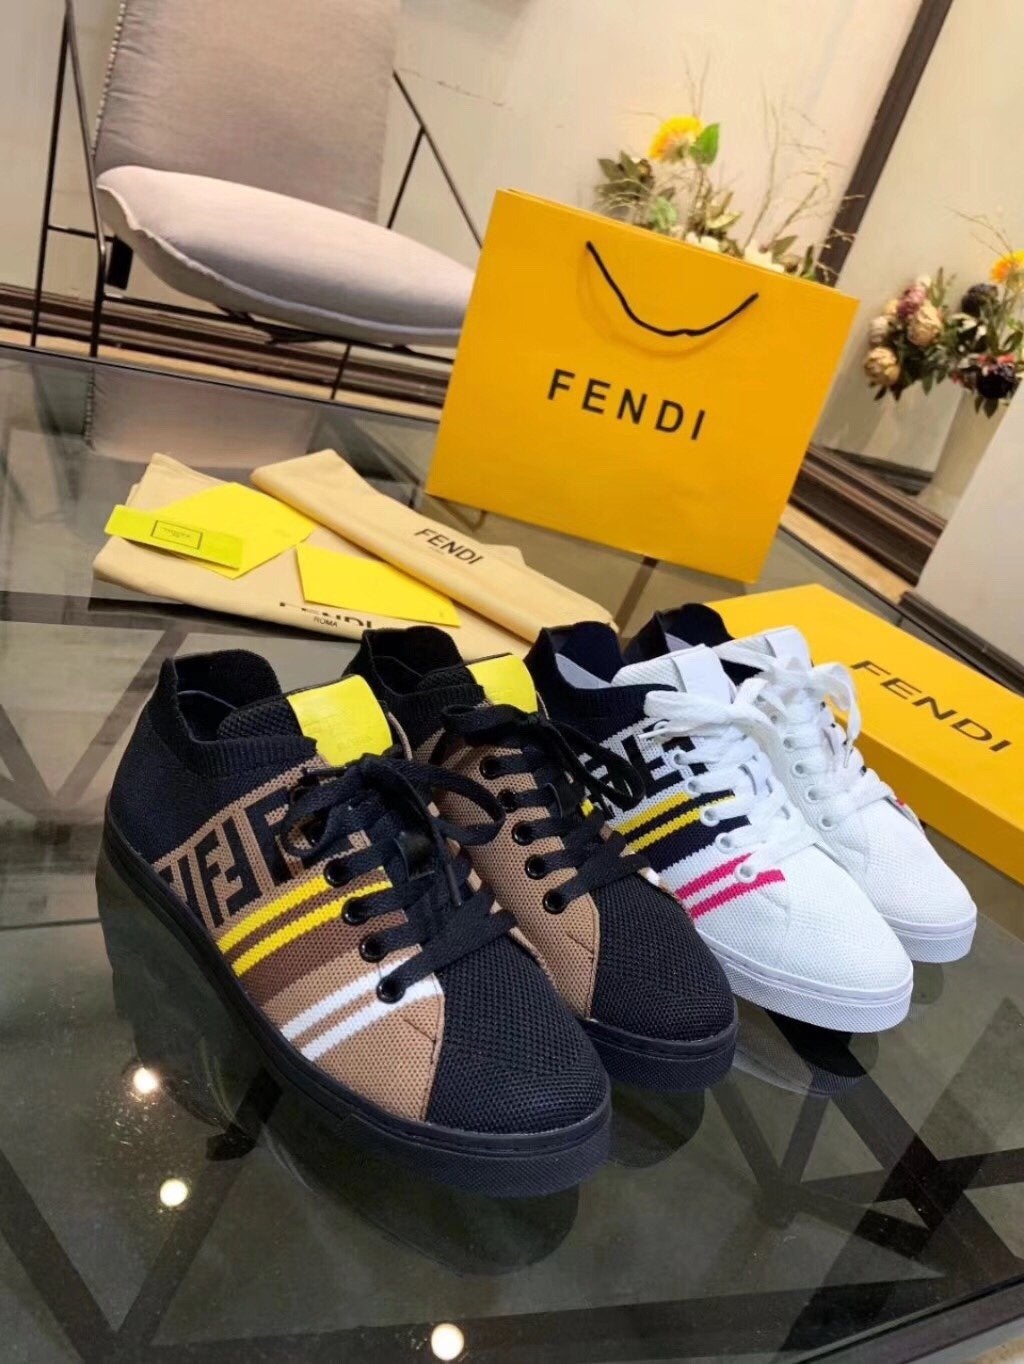 Fendi Women's Leather Fashion Sneakers Shoes